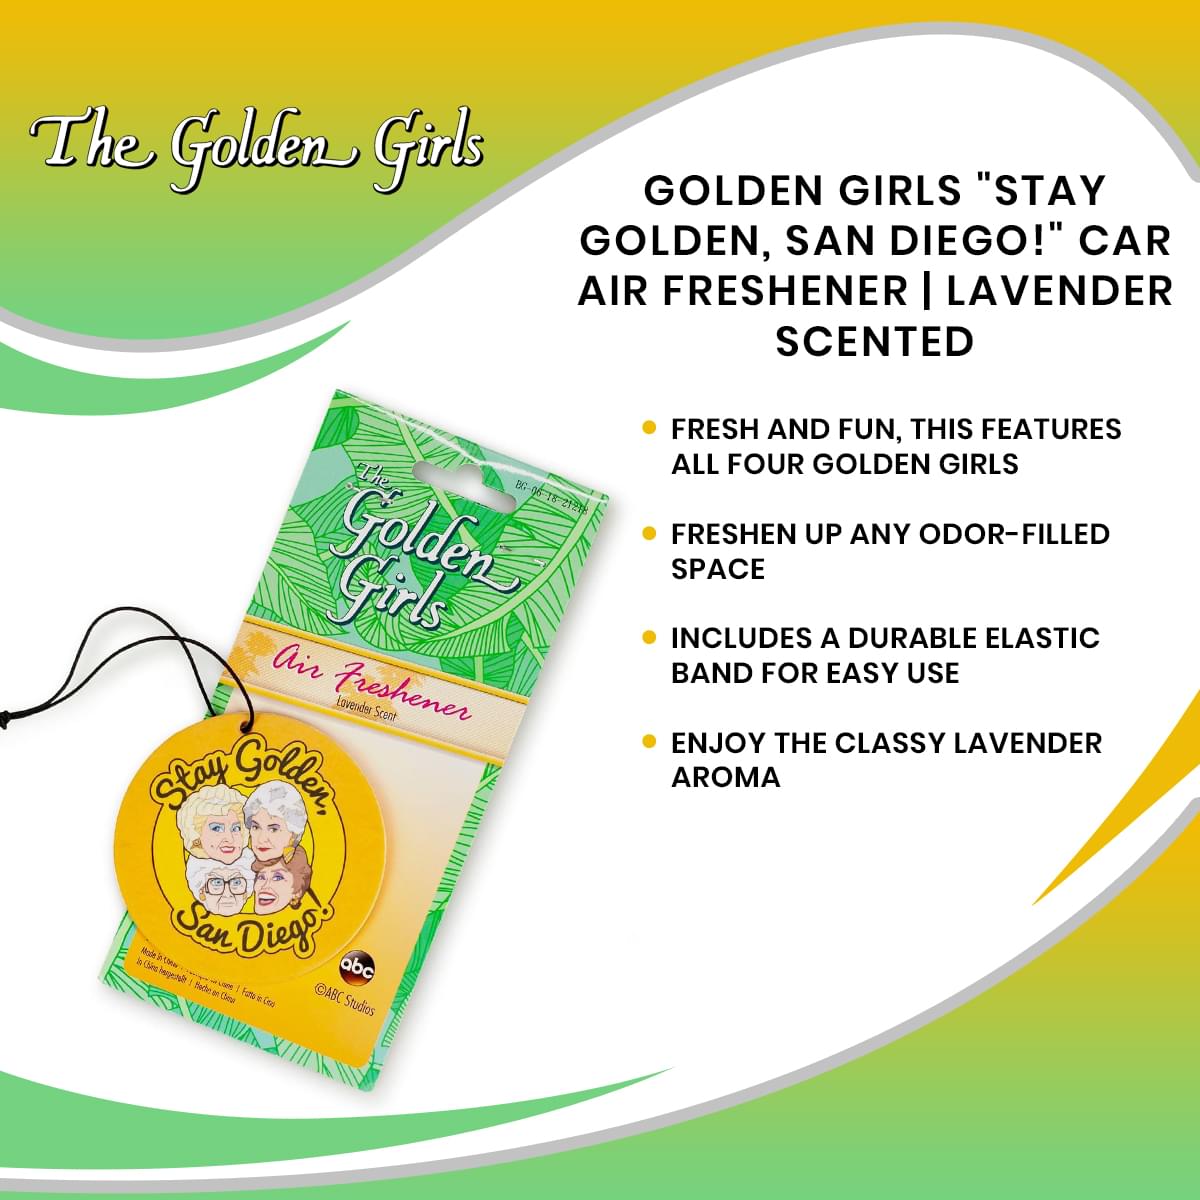 Golden Girls "Stay Golden, San Diego!" Car Air Freshener | Lavender Scented